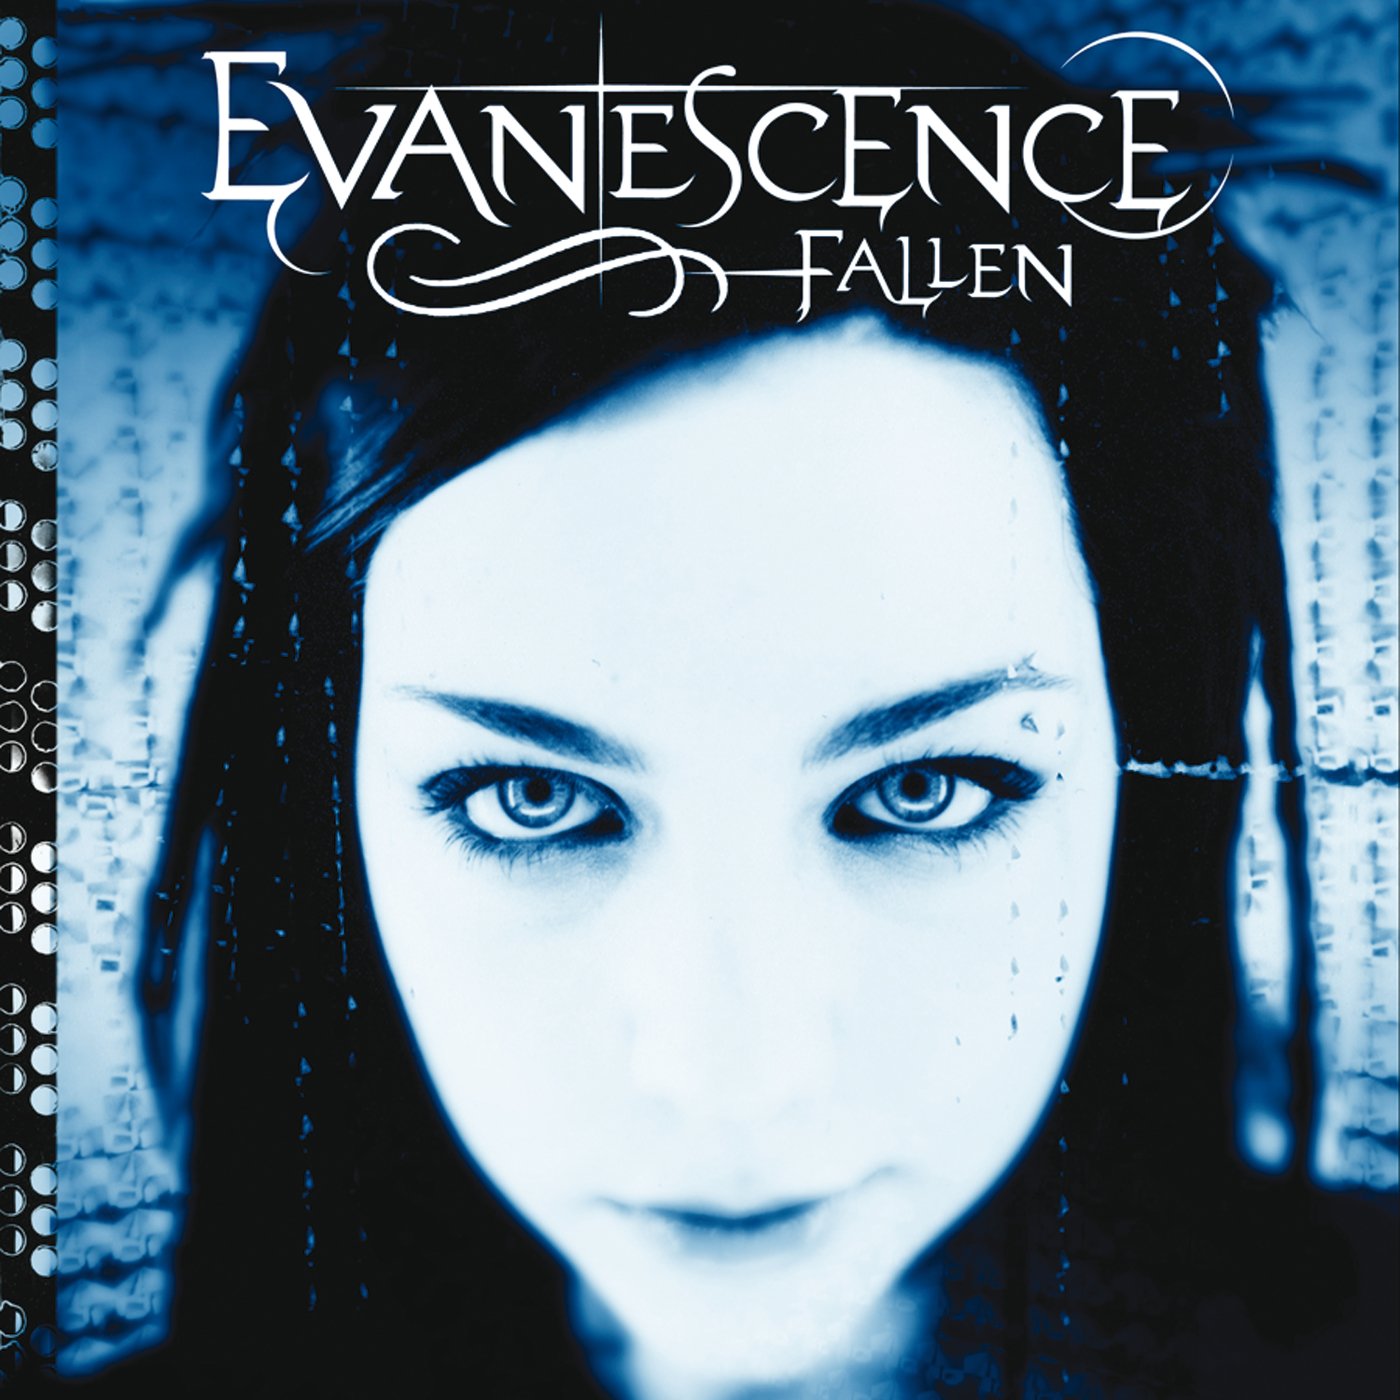 Evanescence fallen